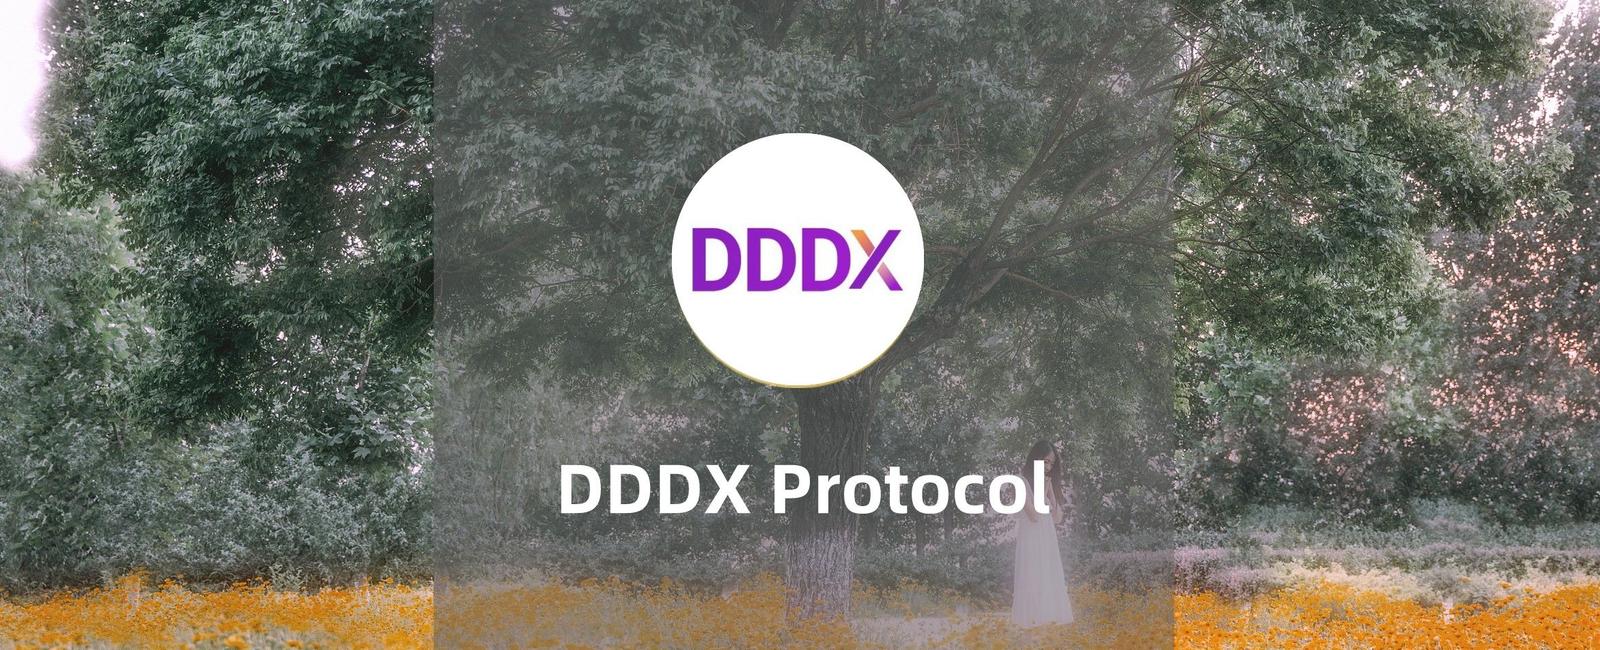 DDDX-BNB Chain上veToken治理模型的继承者